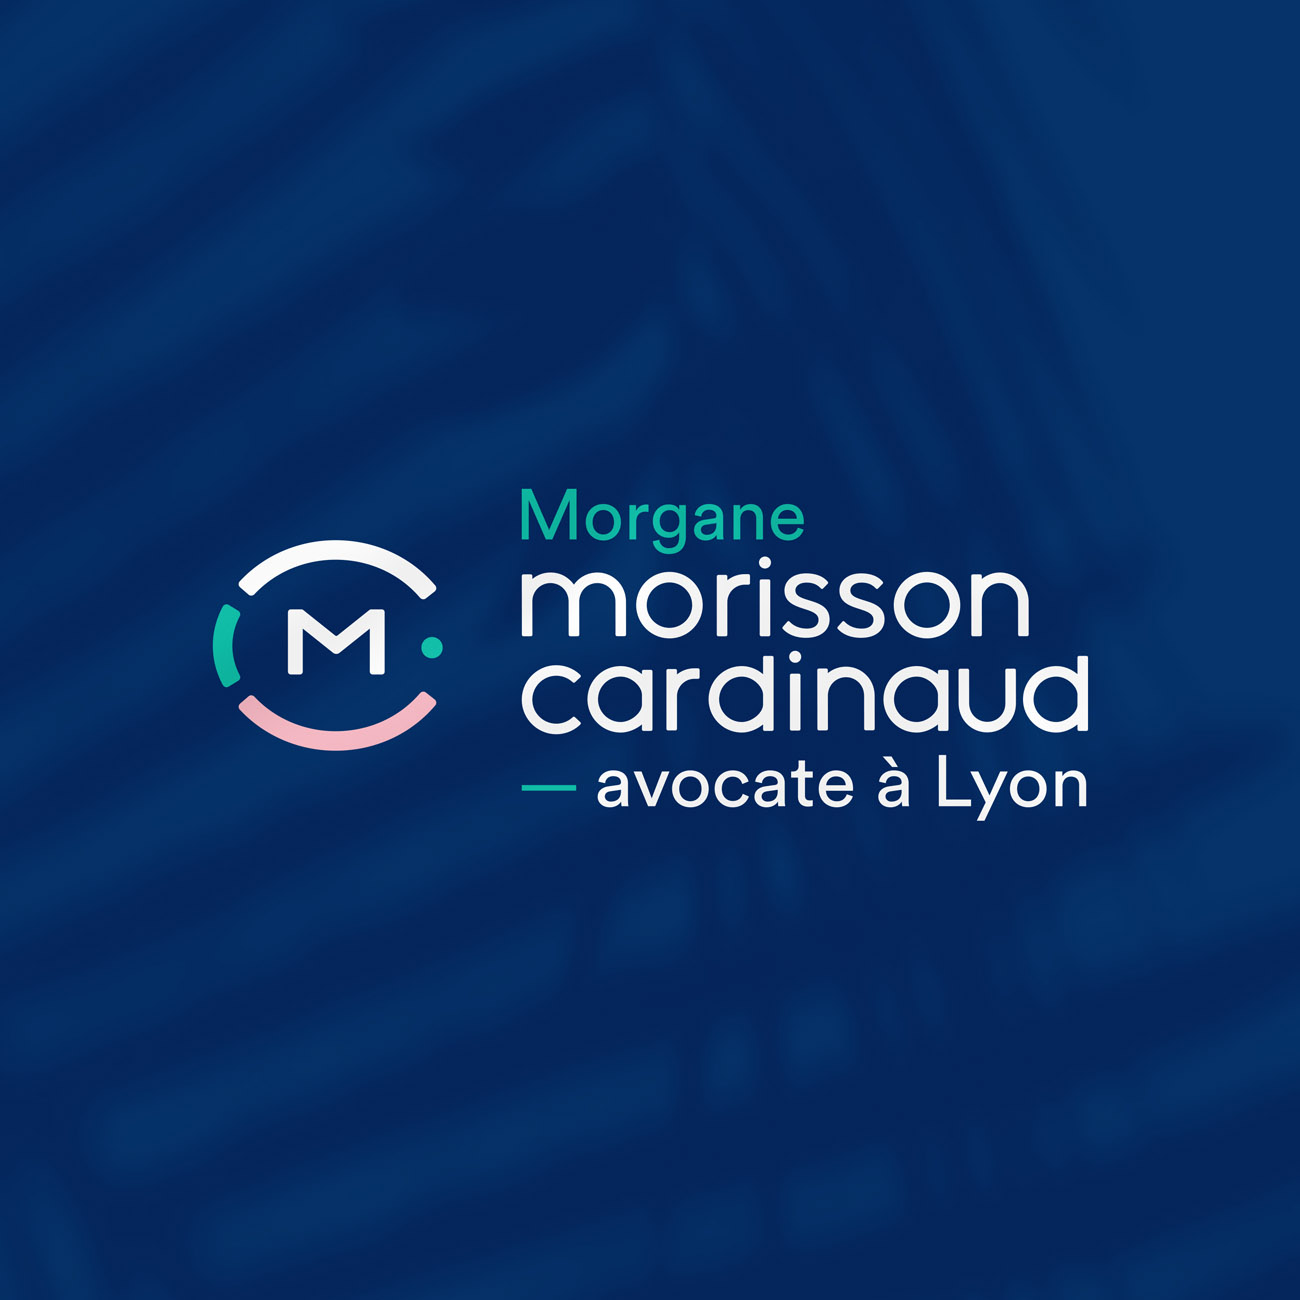 morgane-morisson-cardinaud-avocate-lyon-logo